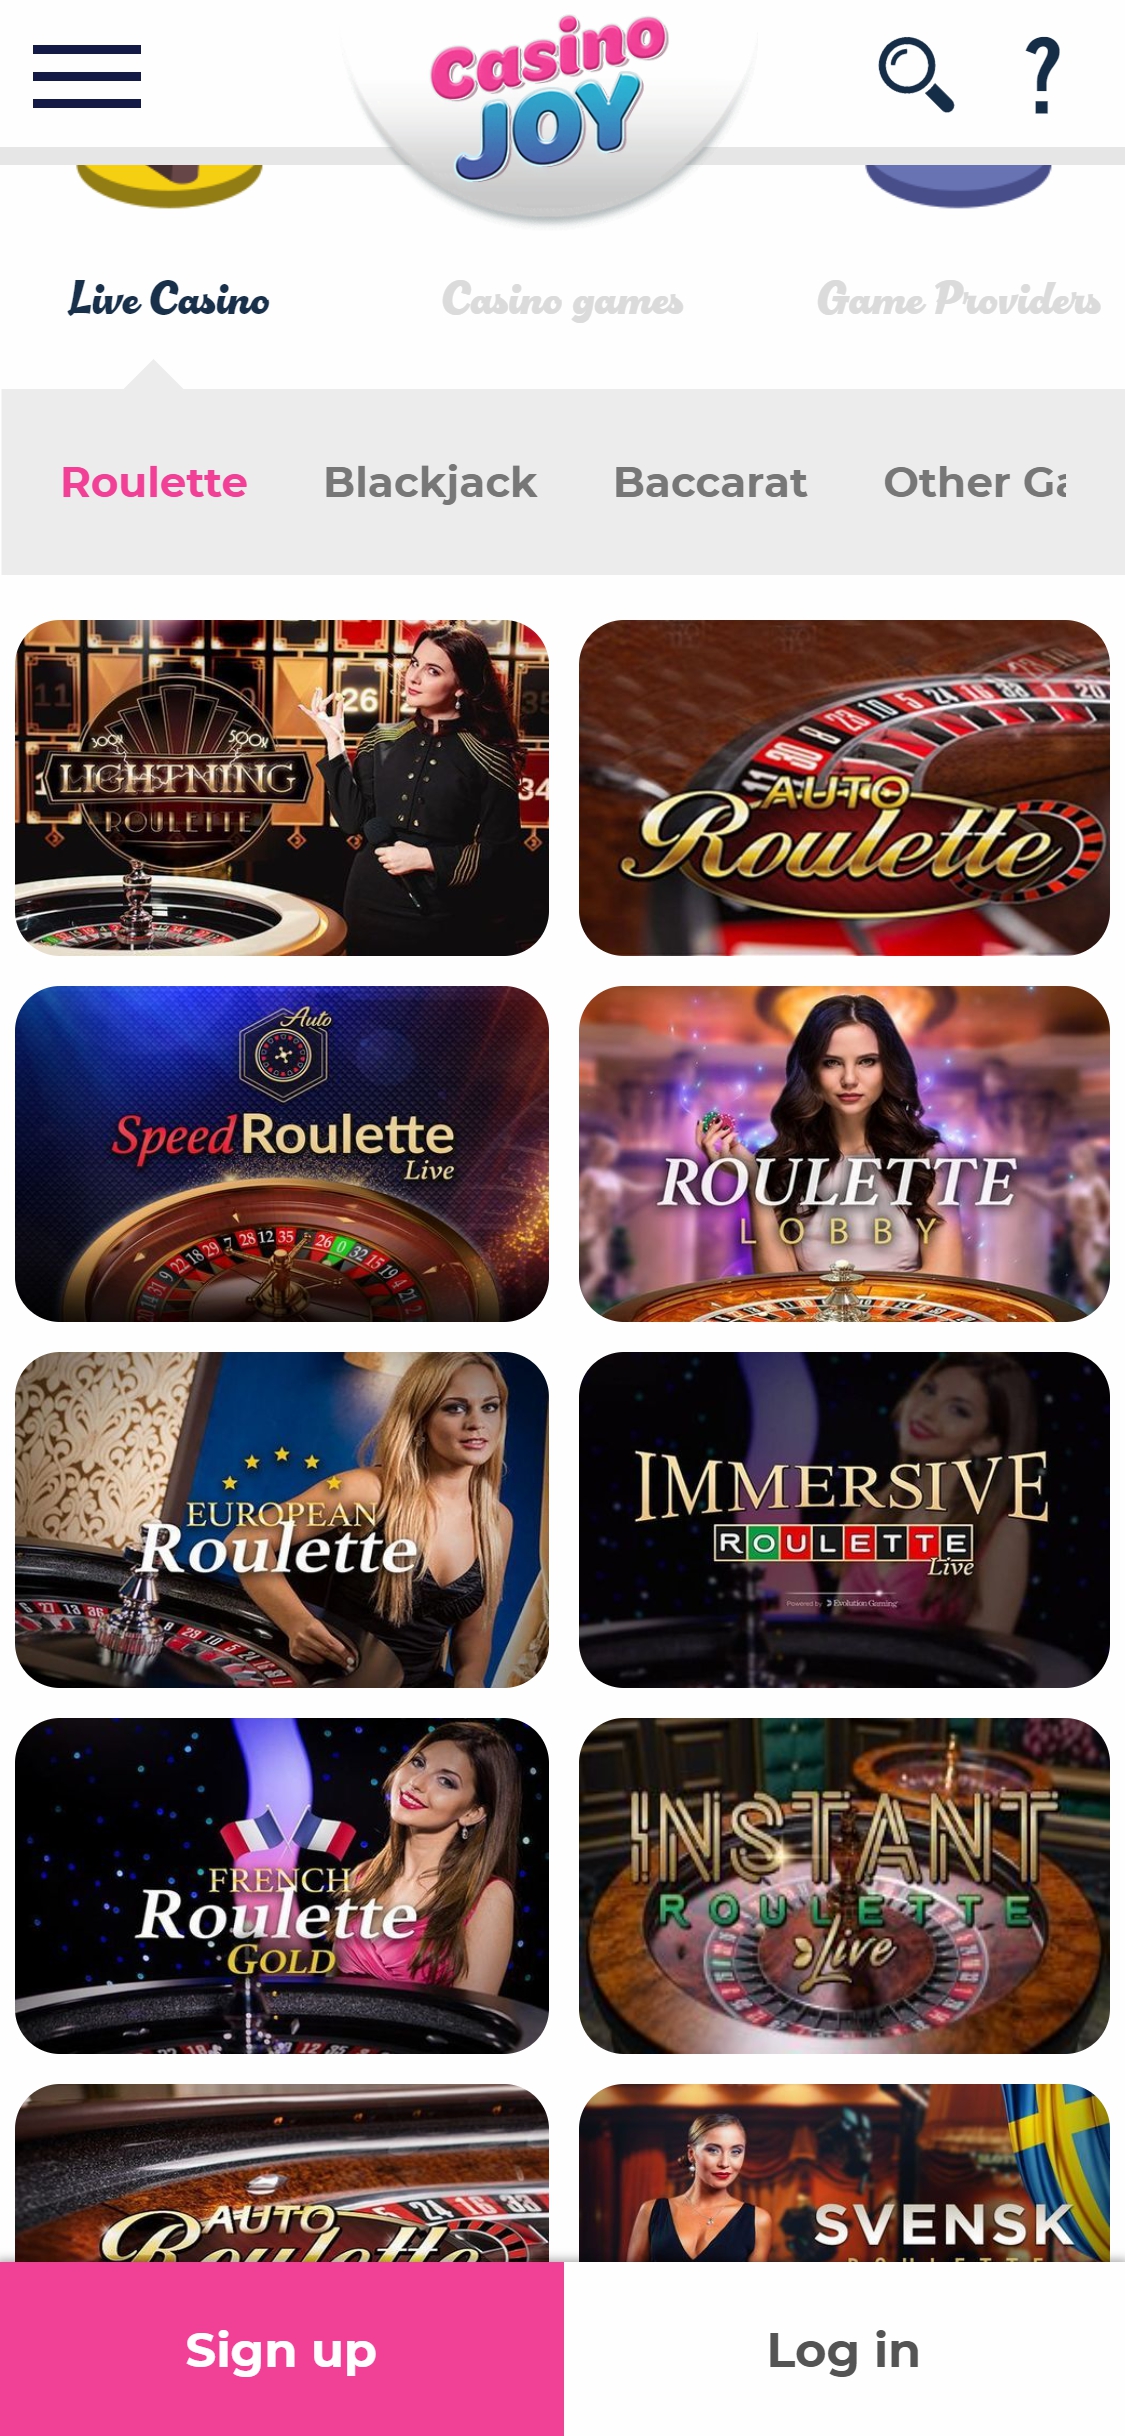 Casino Joy Mobile Live Dealer Games Review